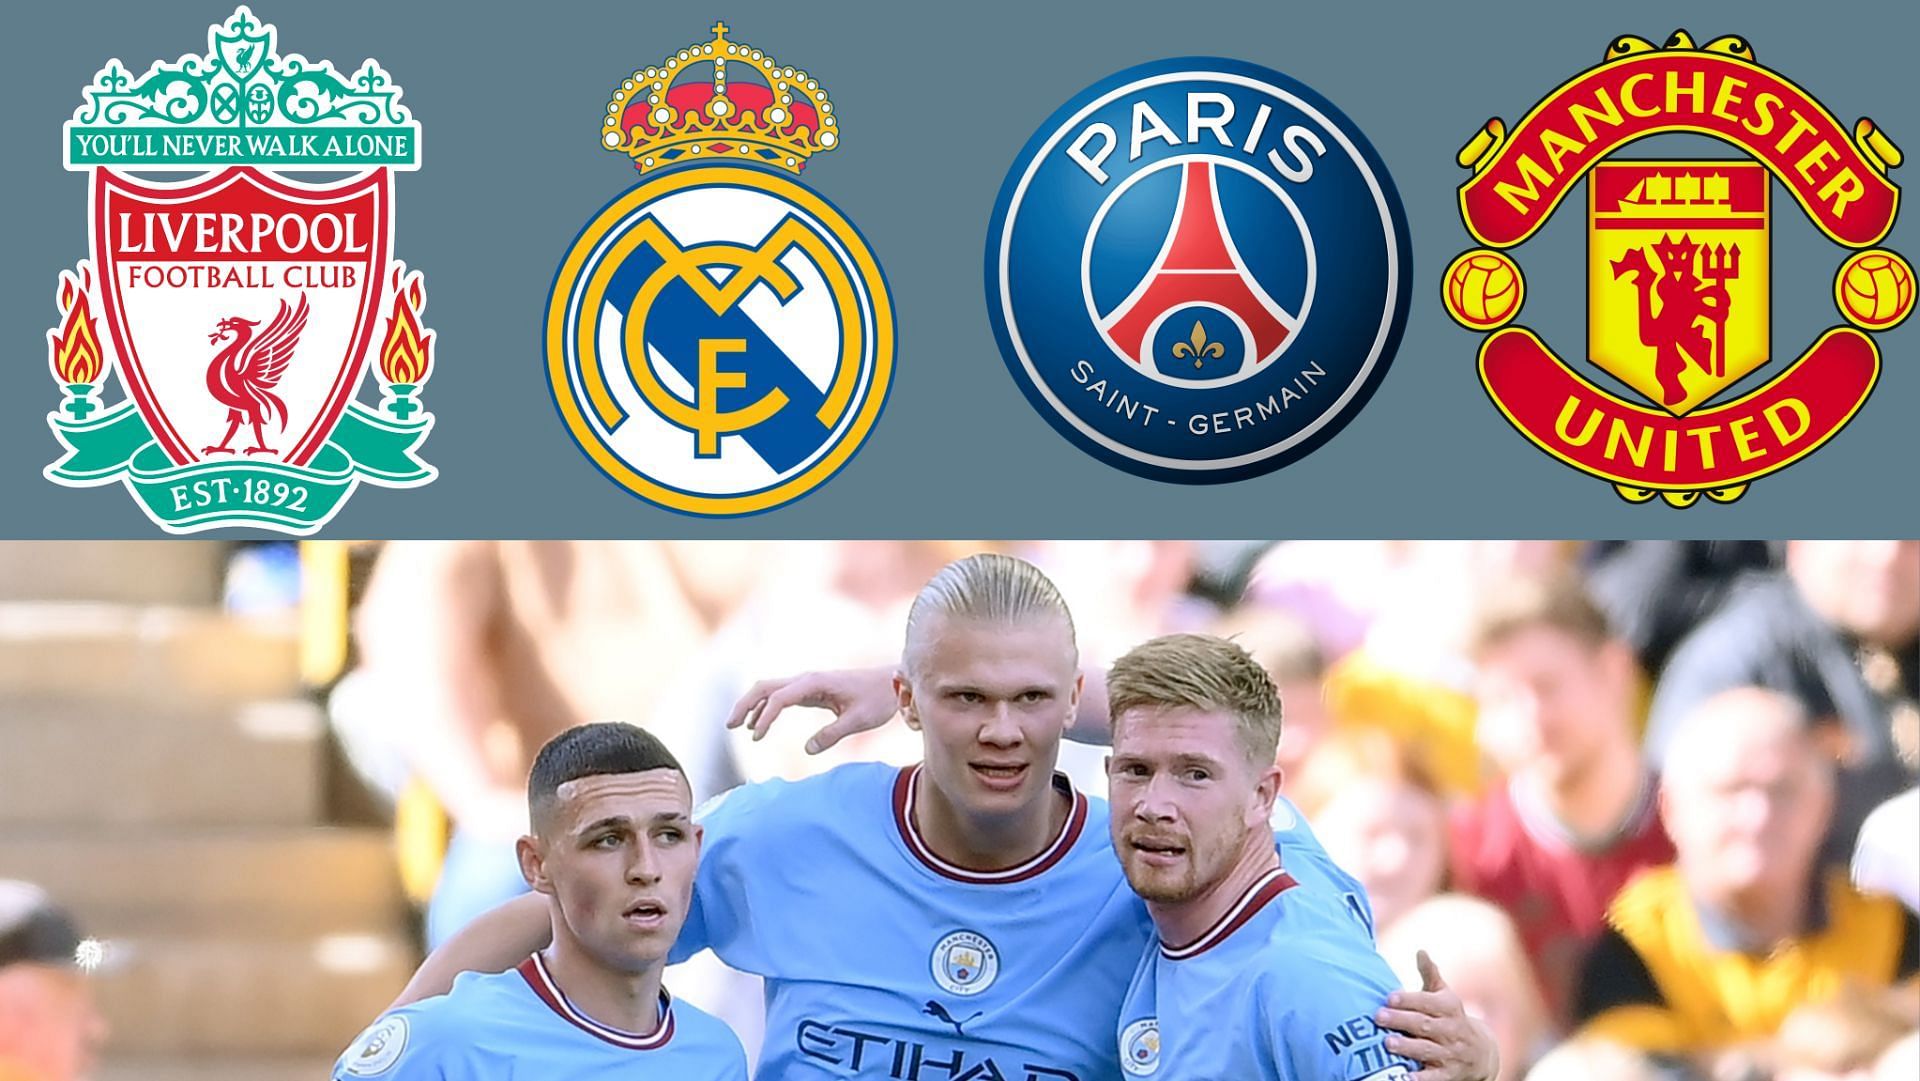 Five best 5-star teams in FIFA 23